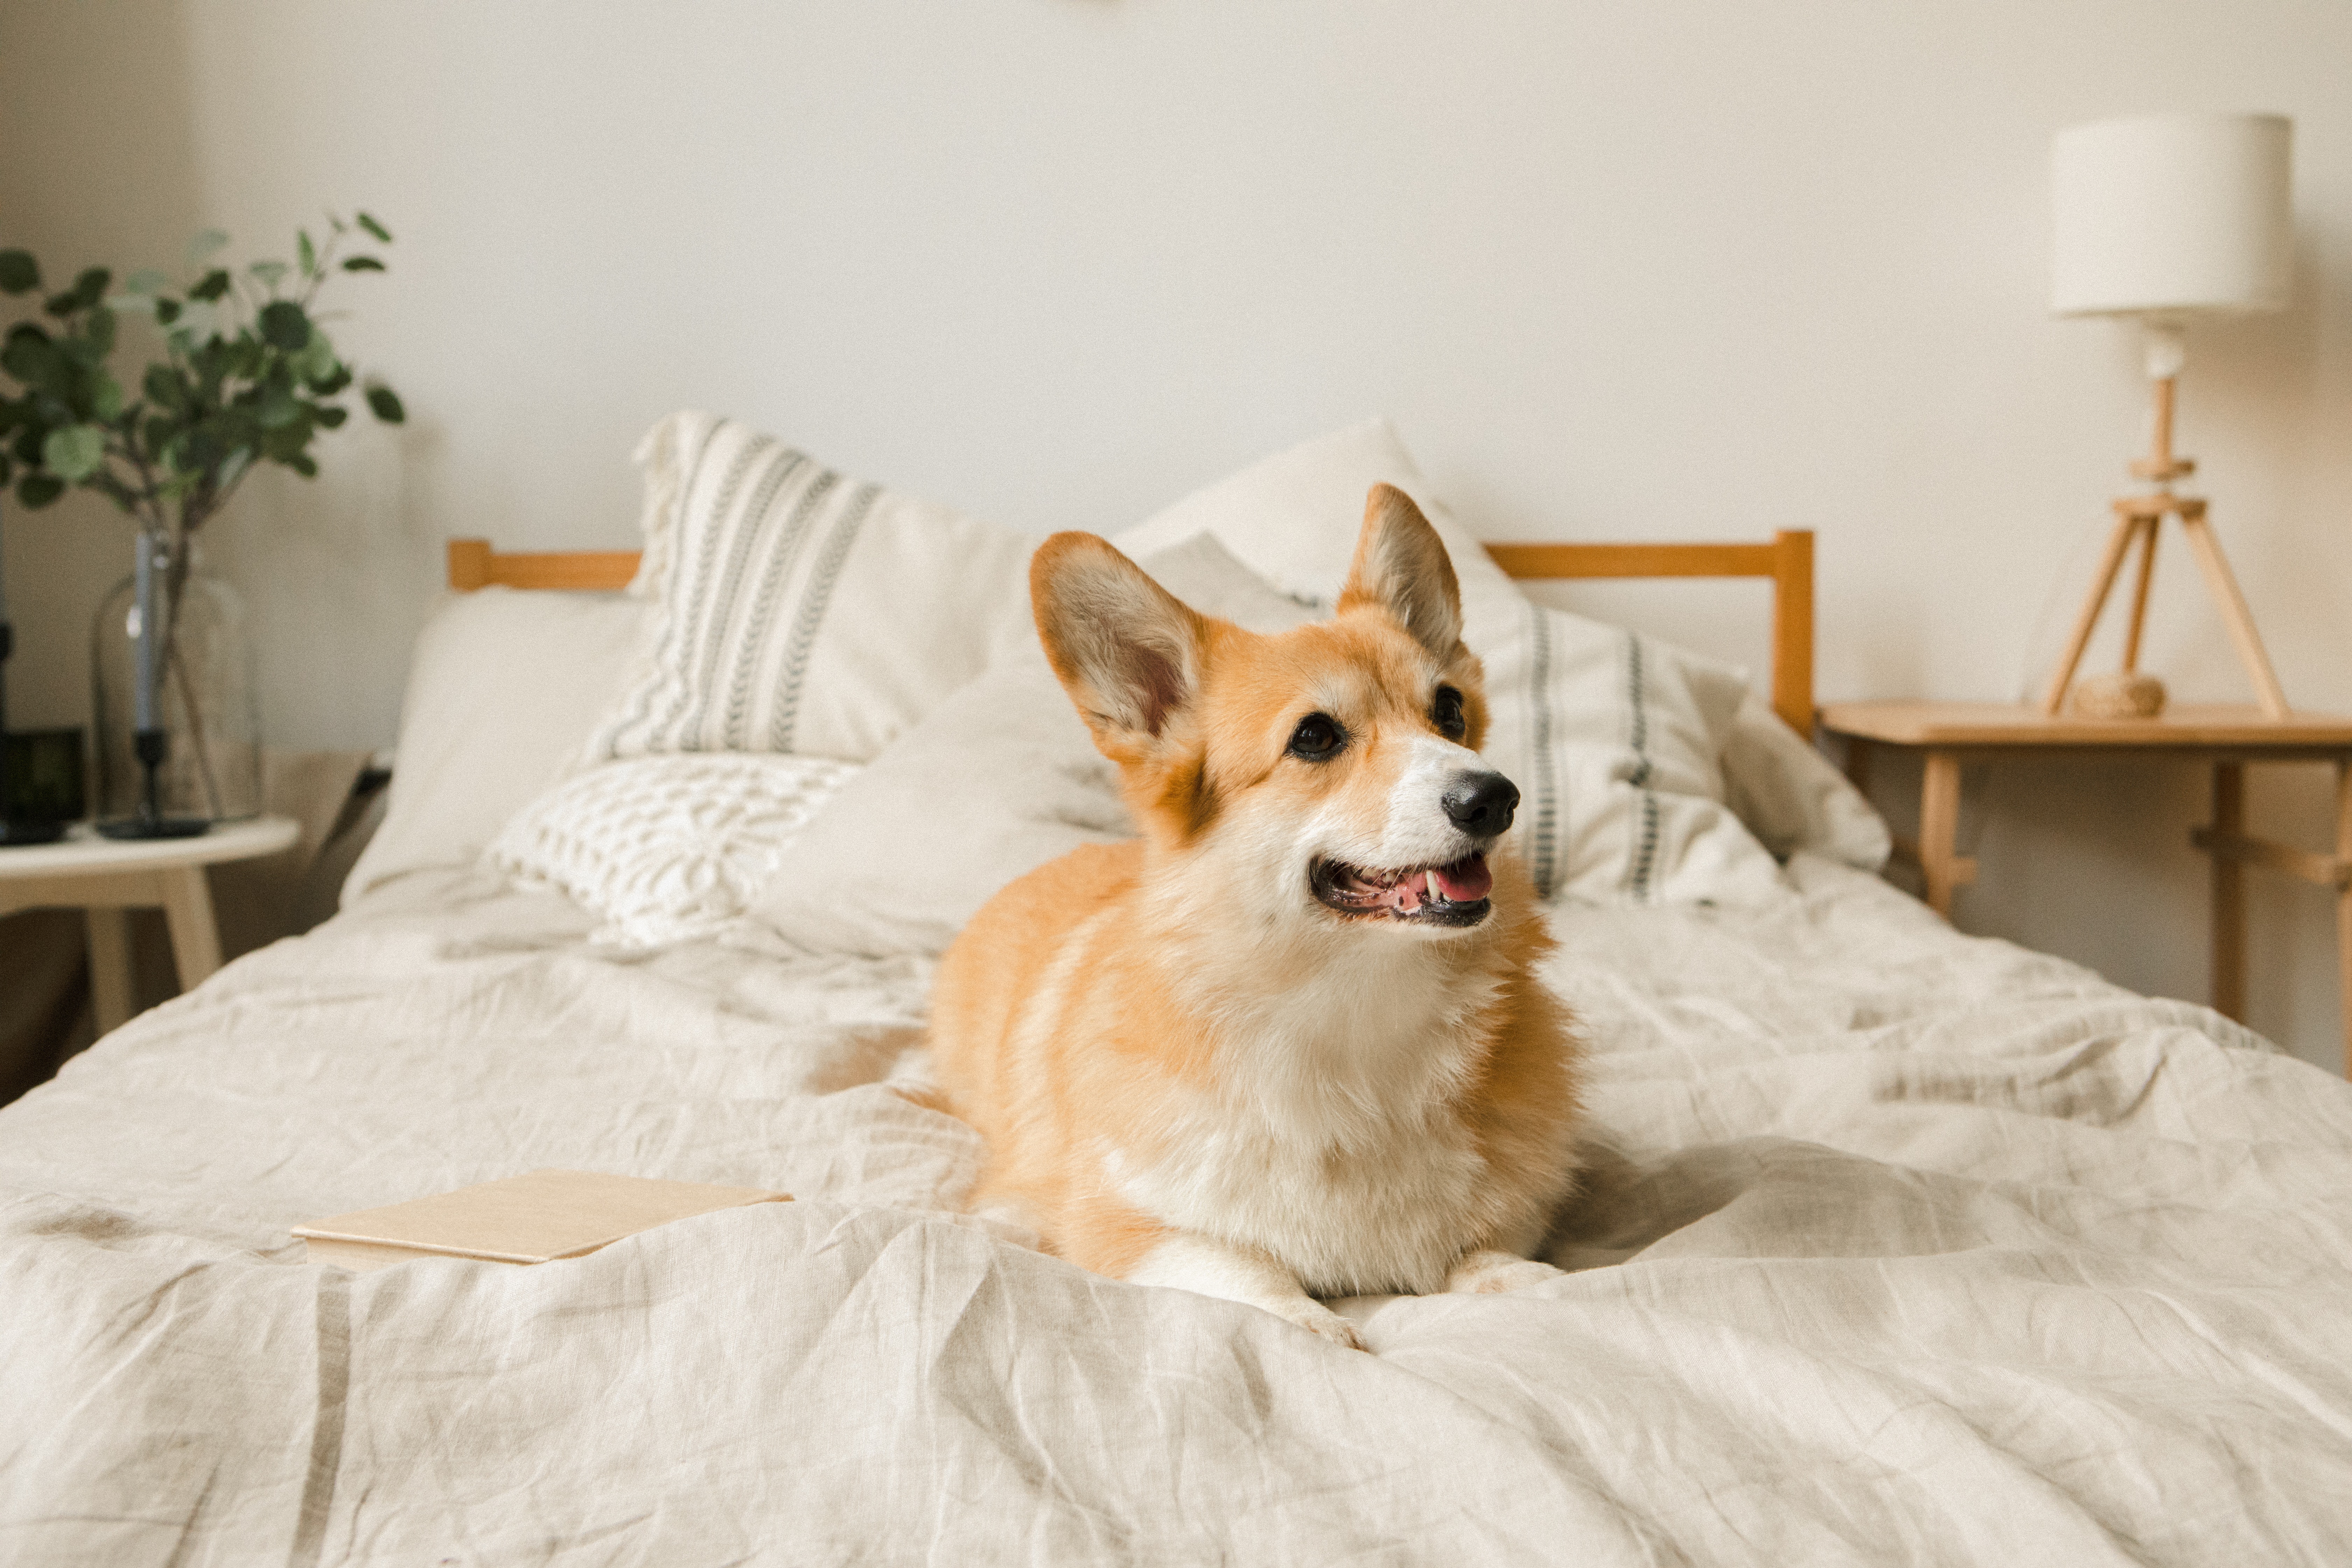 full grown corgi adult dog sitting on a bed